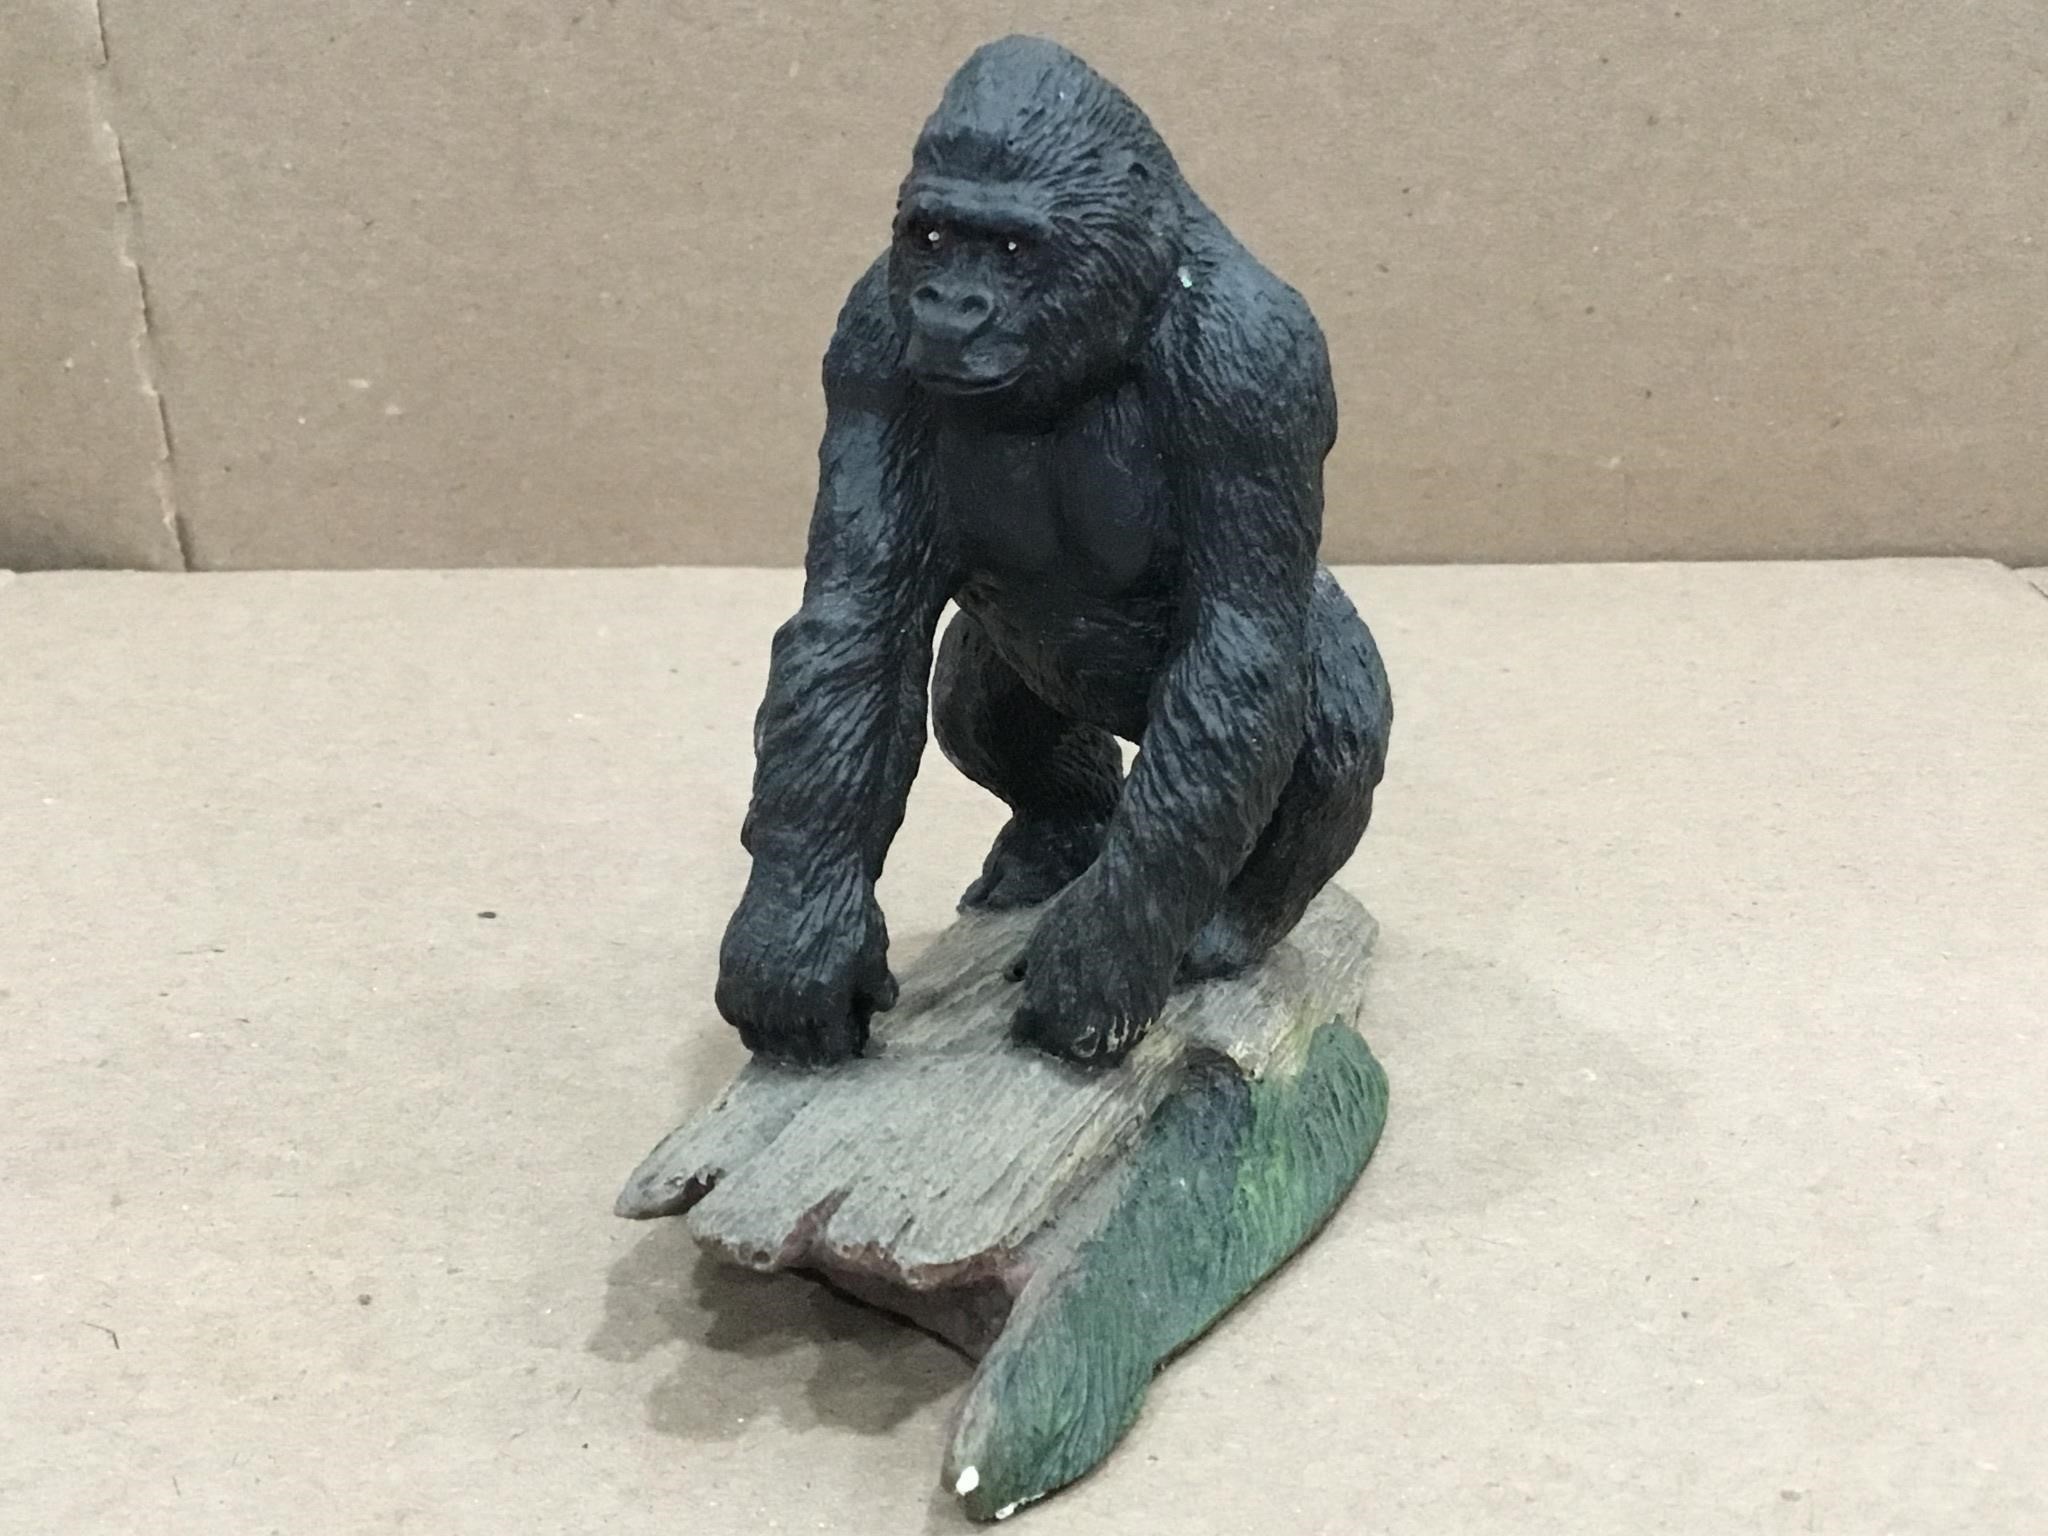 1987 Franklin Mint Wildlife Preservation Figurine